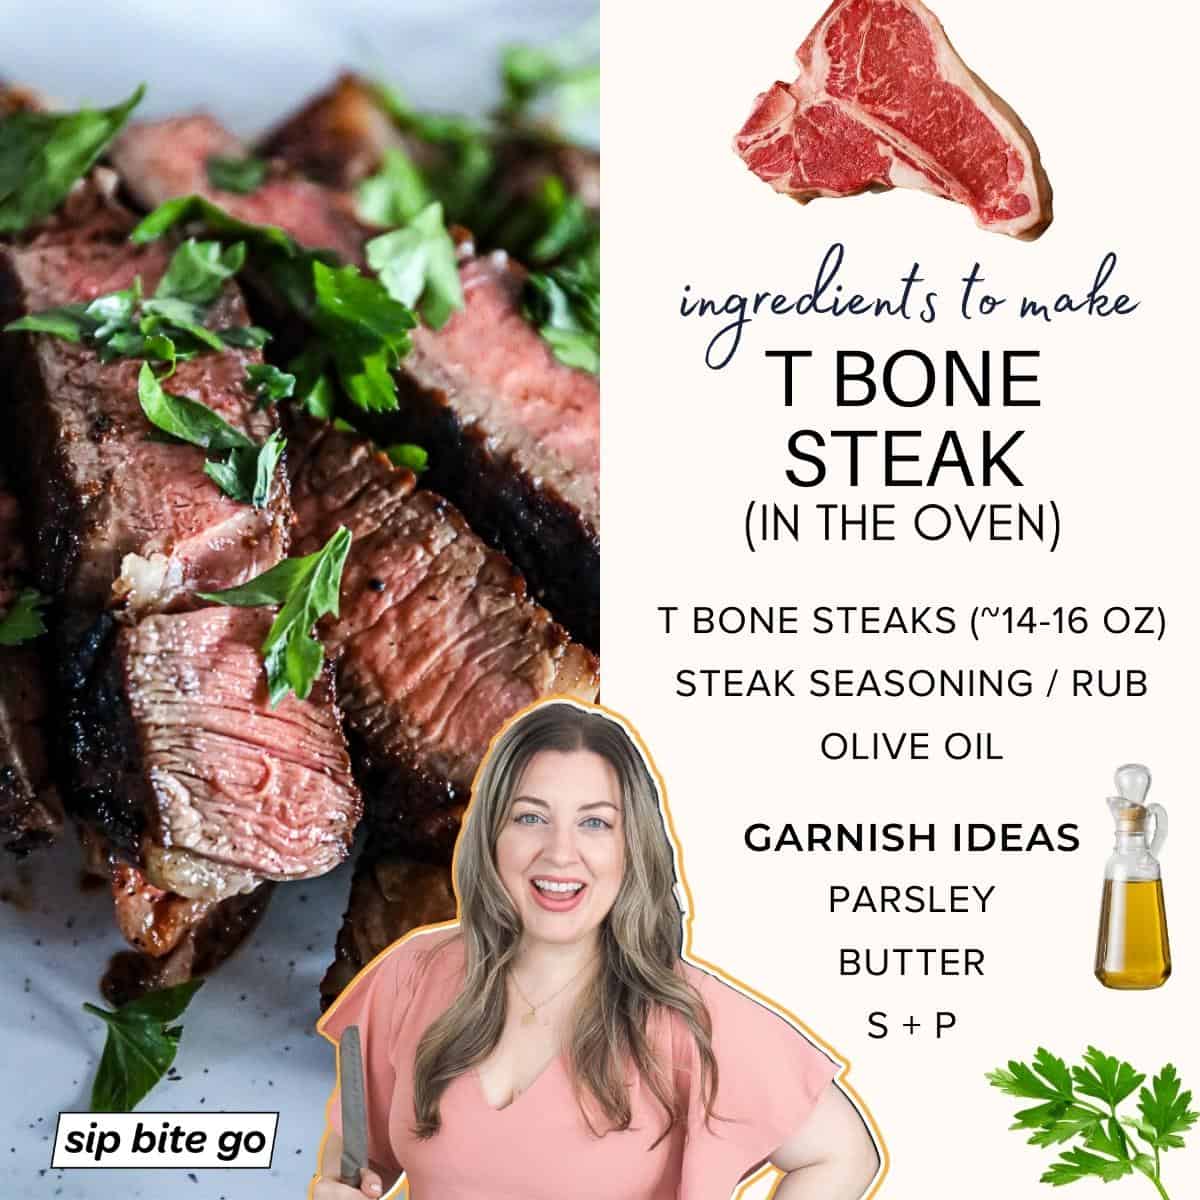 Ingredients for tbone steak in oven recipe